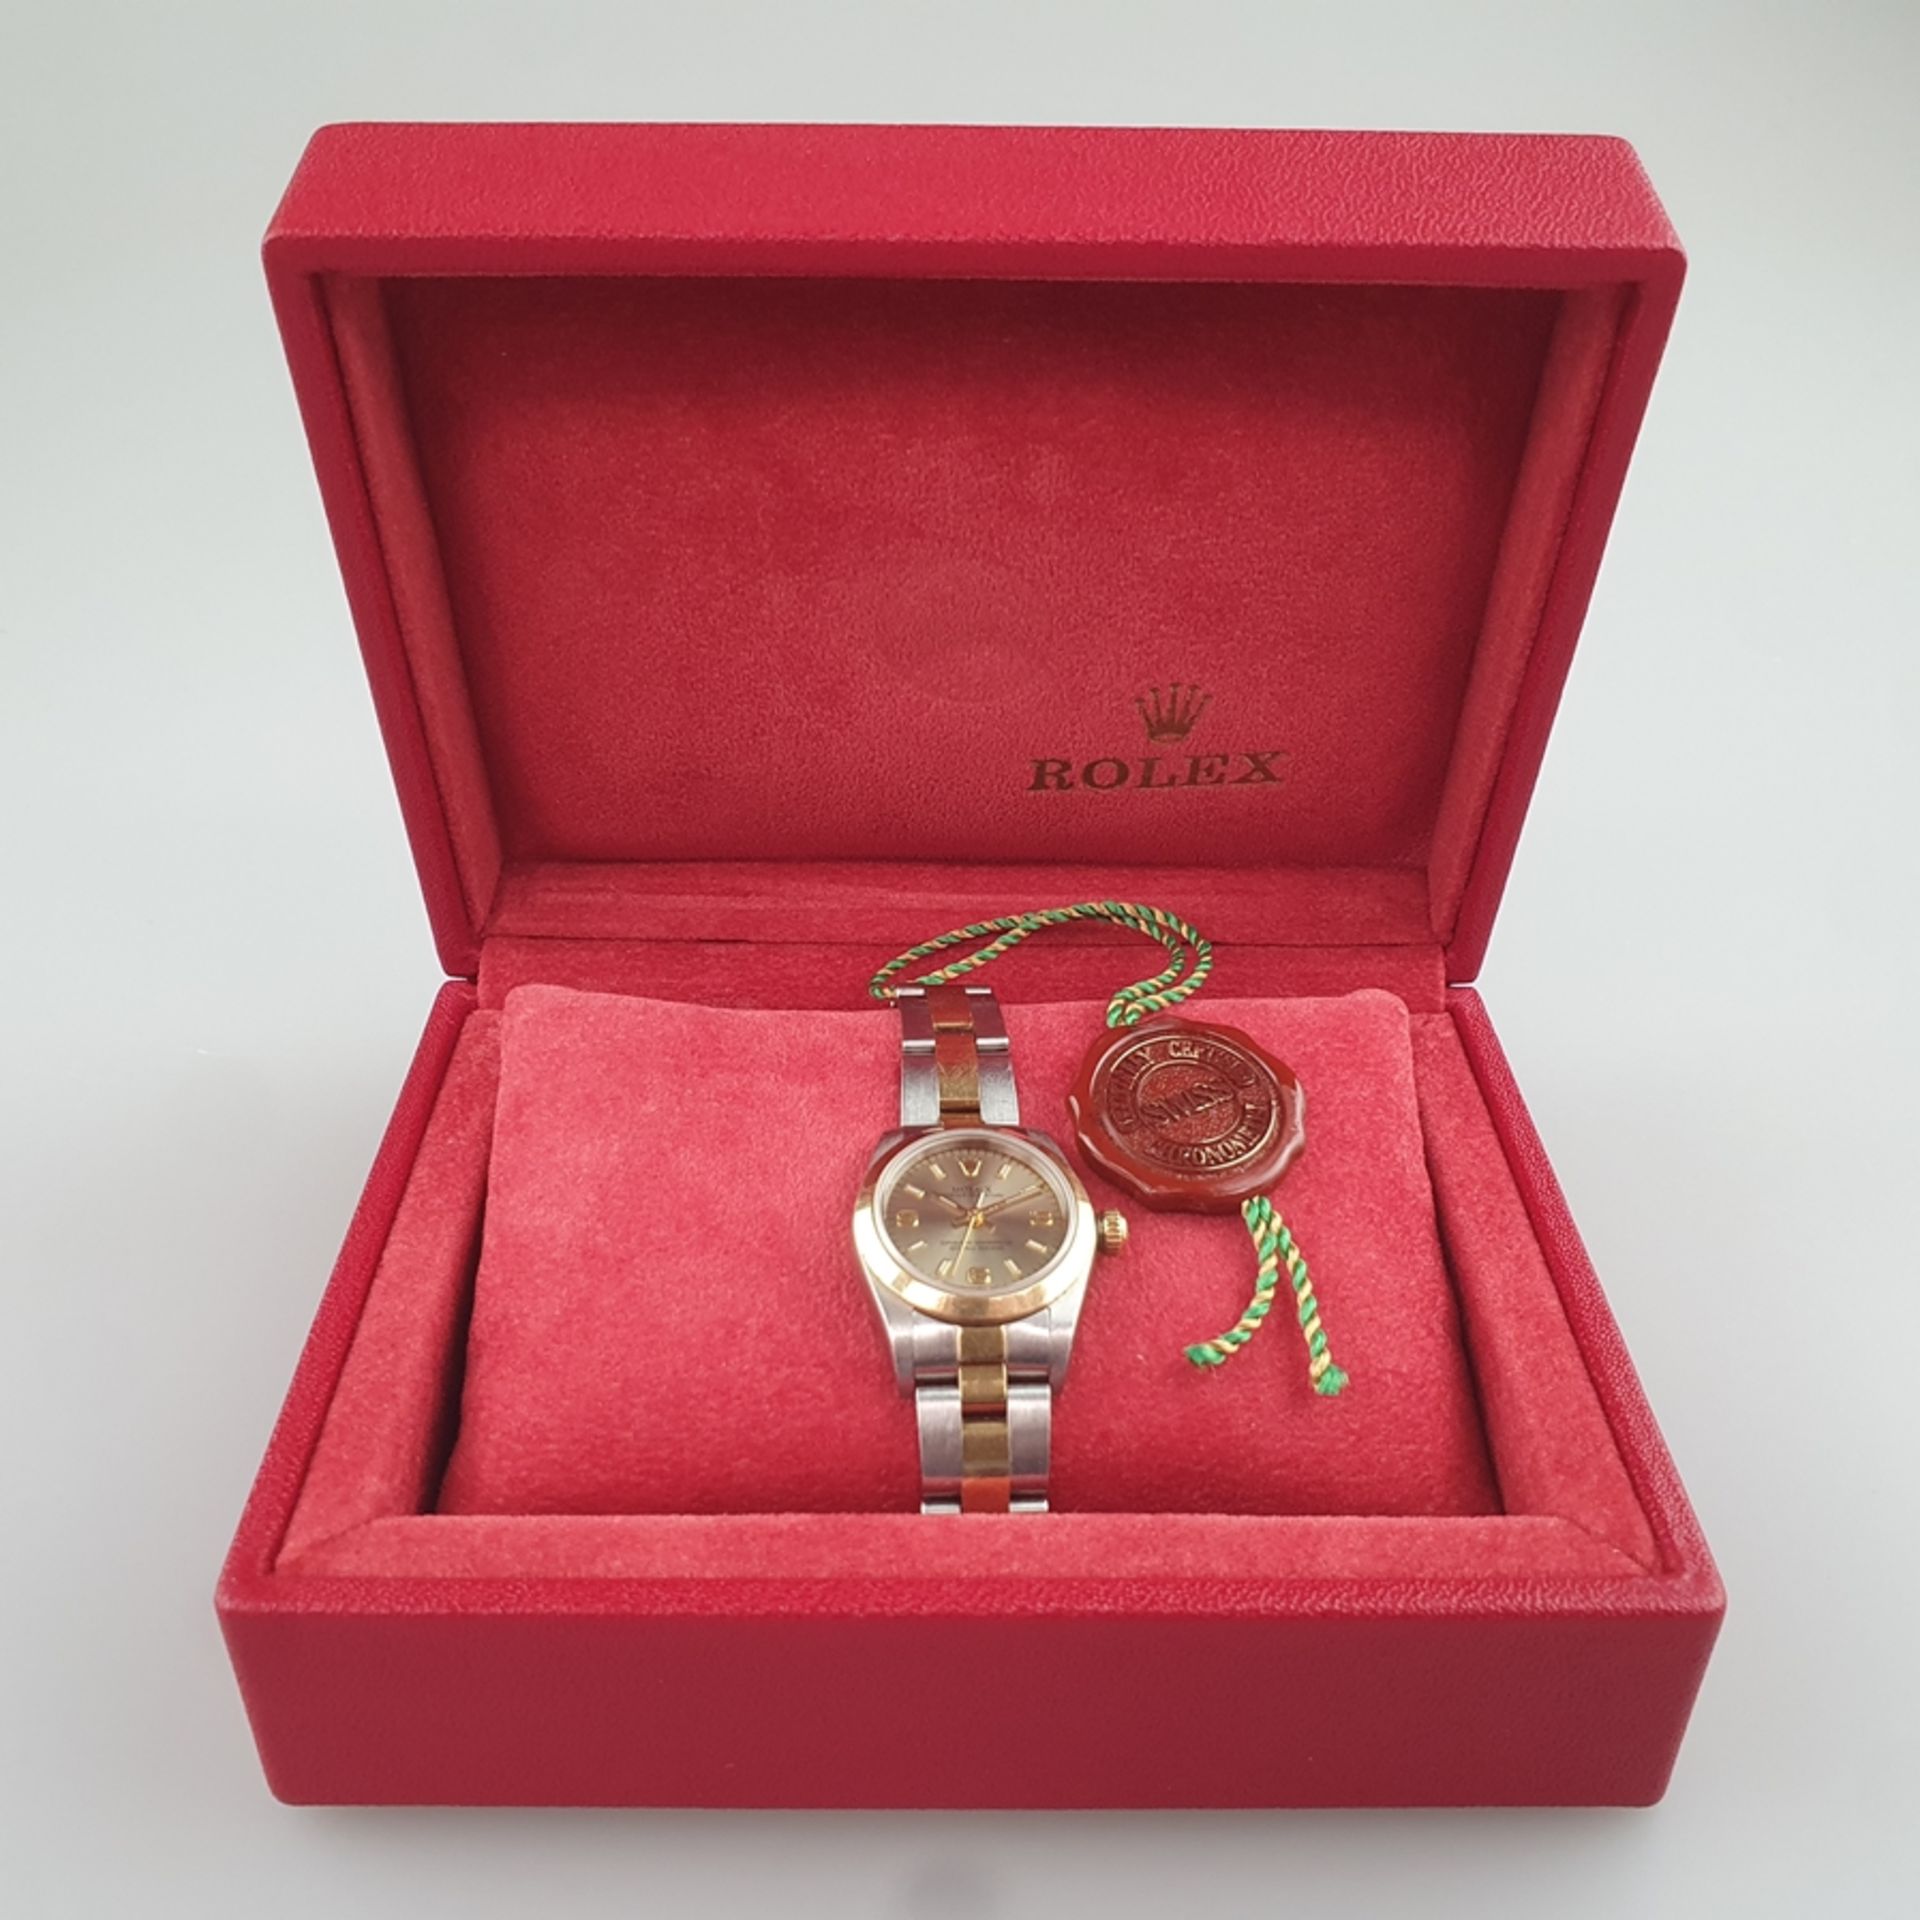 Rolex-Damenarmbanduhr - Oyster Perpetual, Datejust, bicolores Gehäuse und Armband aus 18K Gelbgold - Image 8 of 10